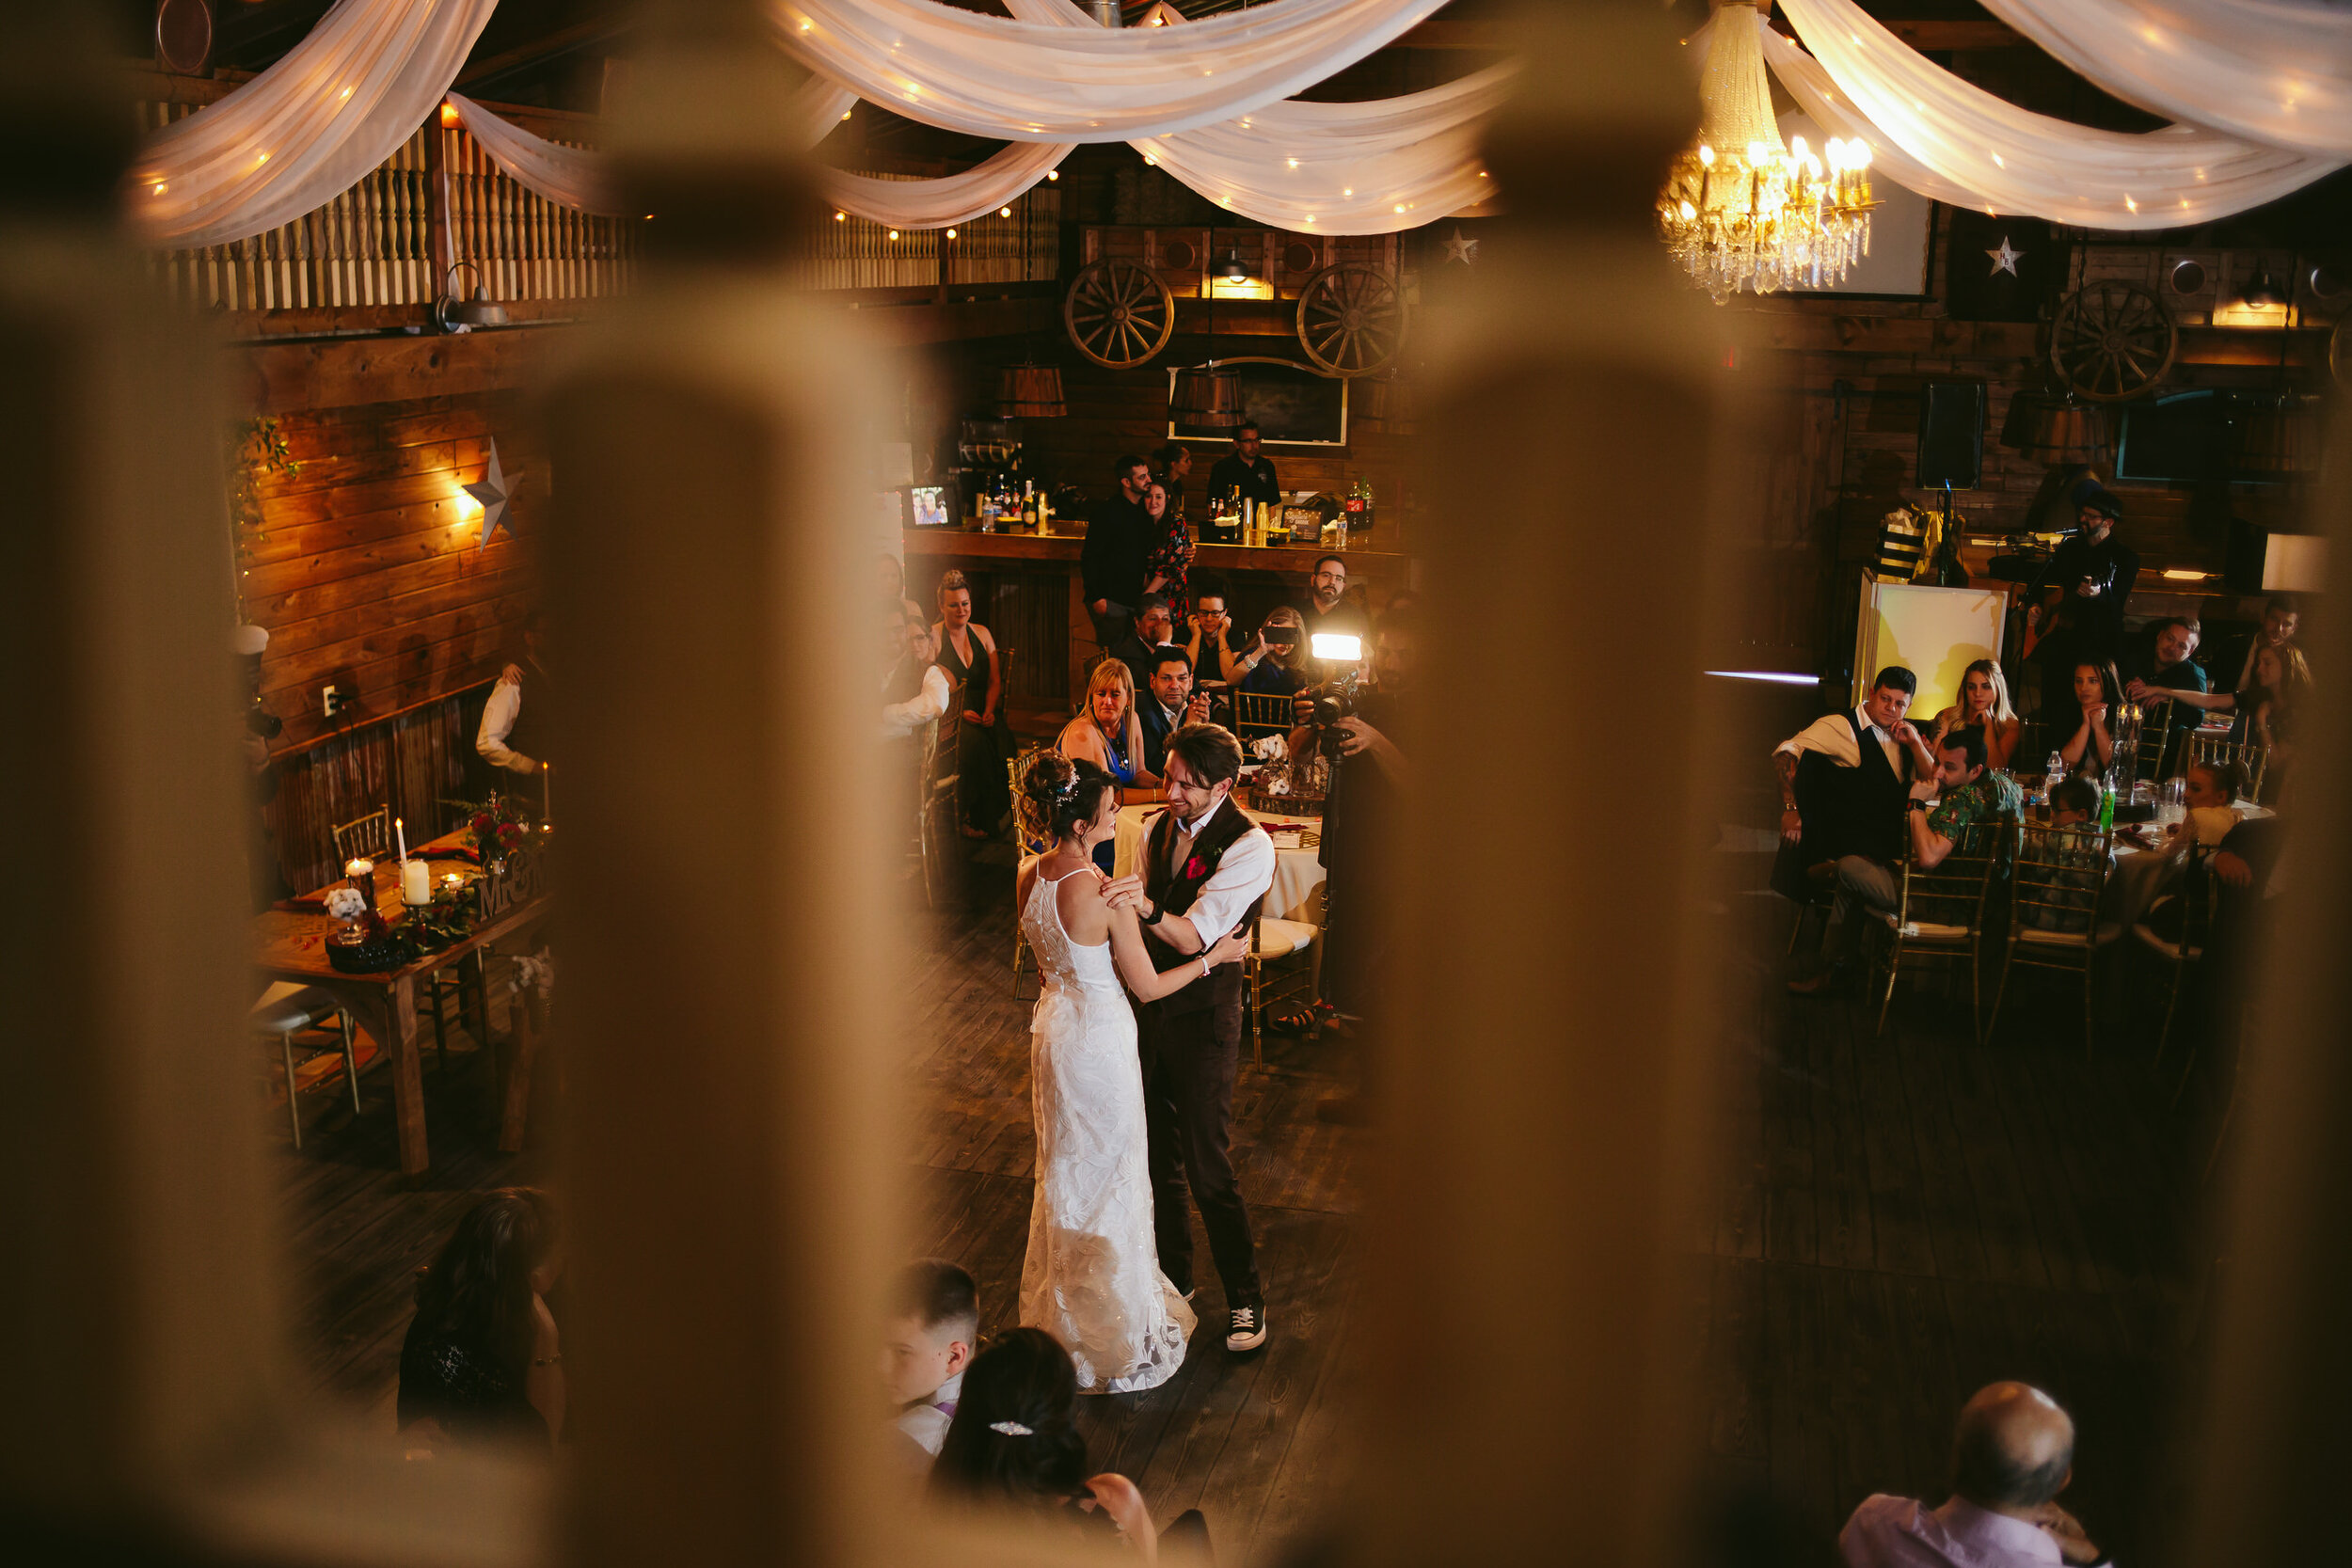 Apopka-Wedding-Reception-Hidden-Barn-Tiny-House-Photo-75.jpg